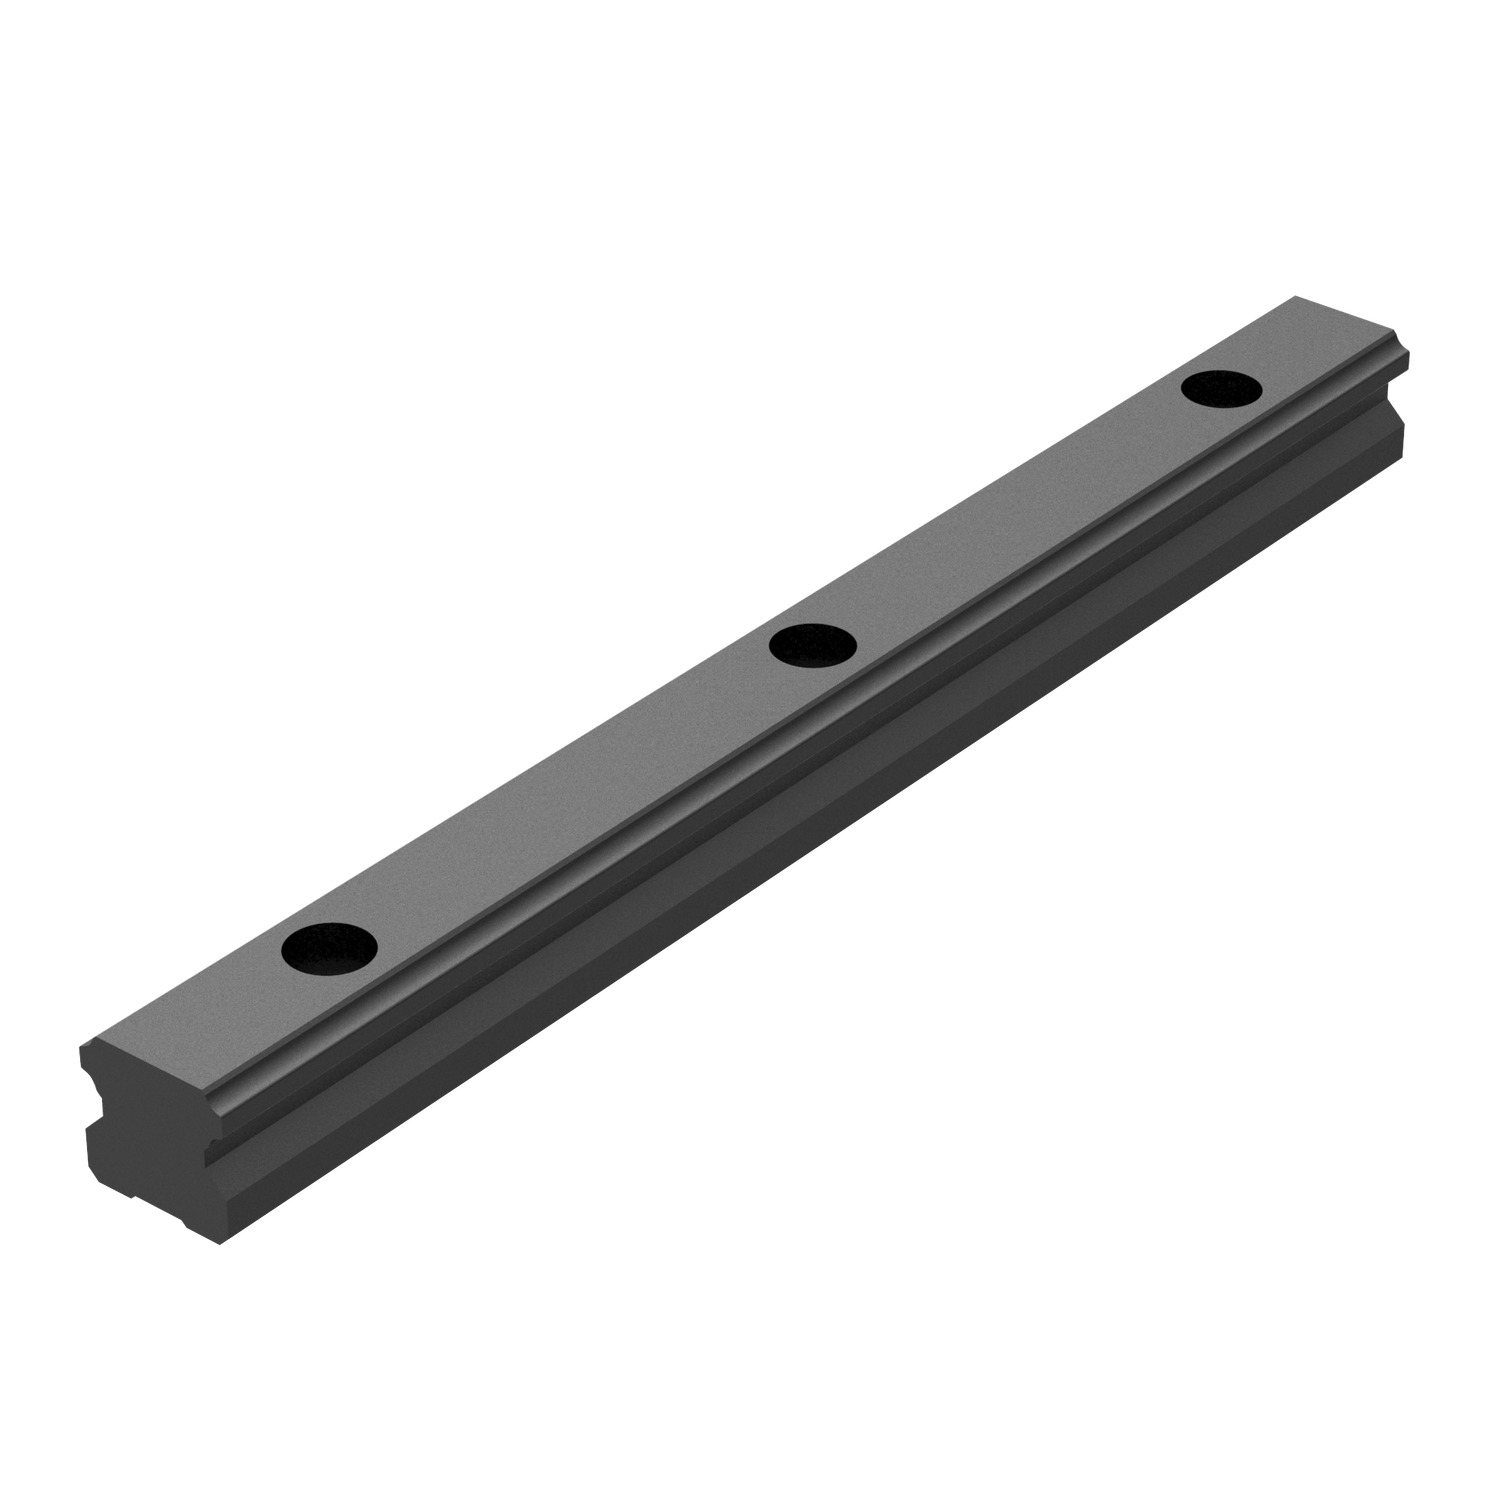 L1016.BL25-0820 Black Linear guide rail 25mm 820 Black Oxide